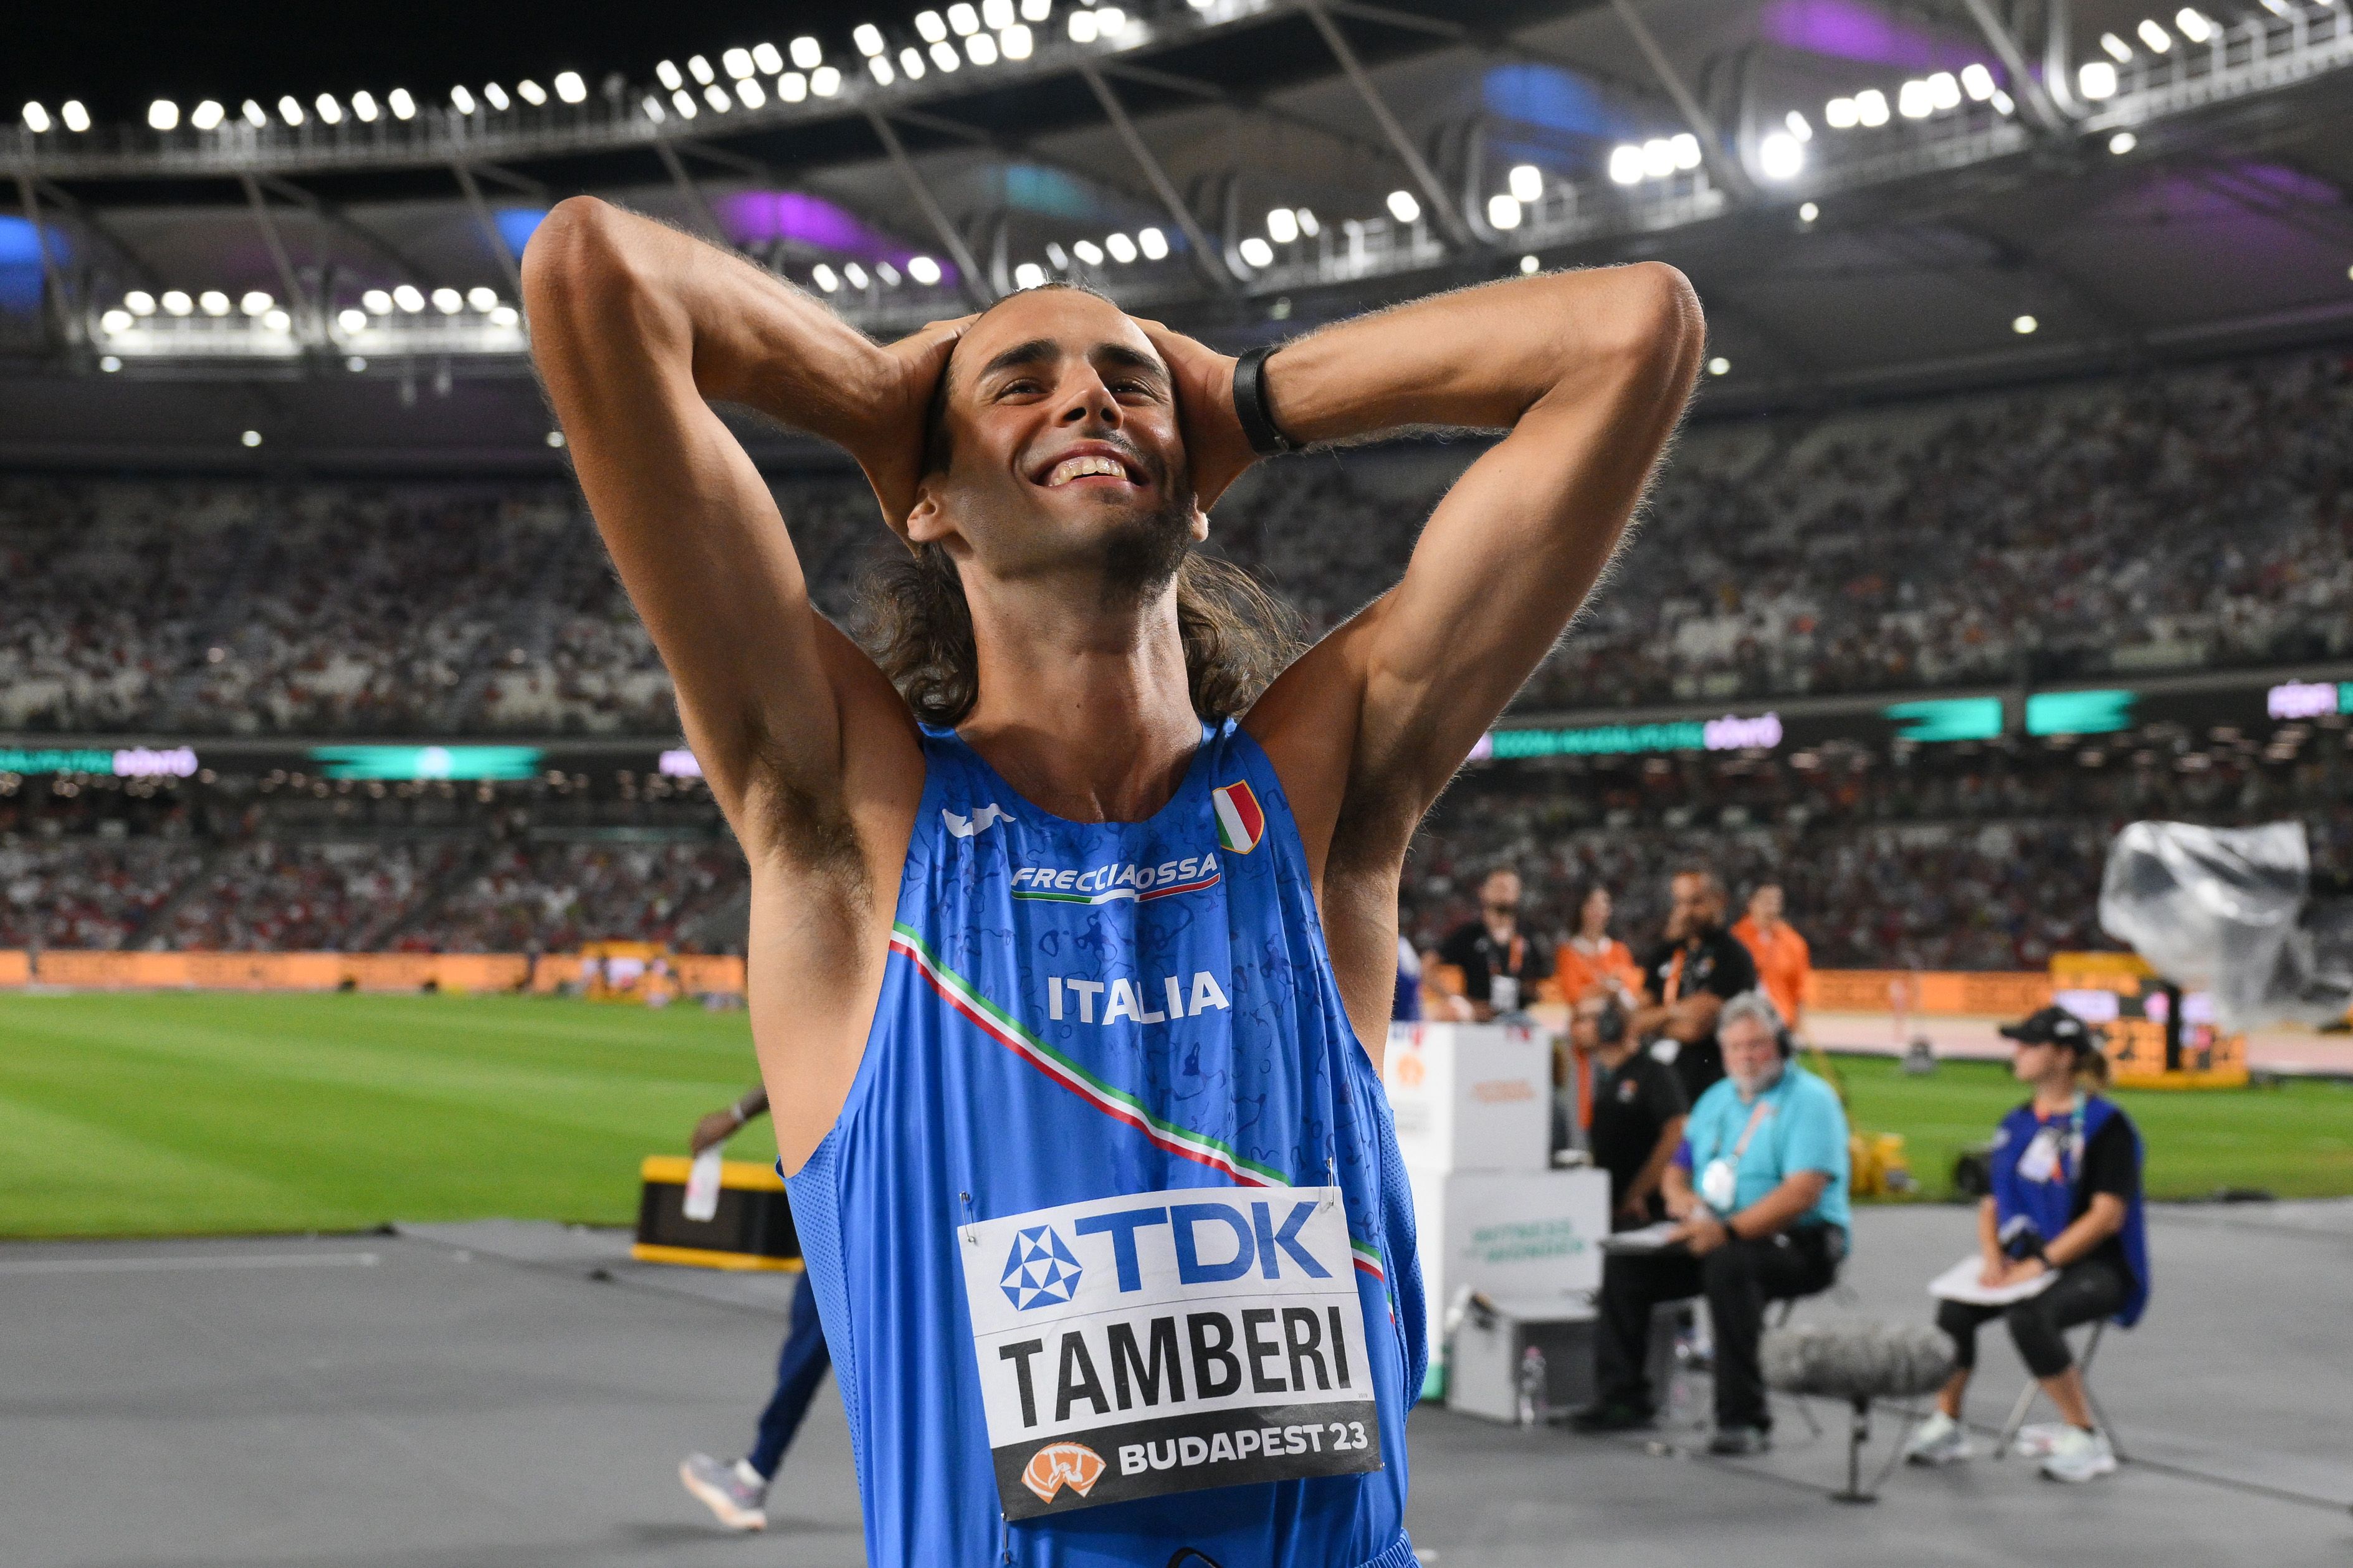 Gianmarco Tamberi celebrates his high jump win in Budapest